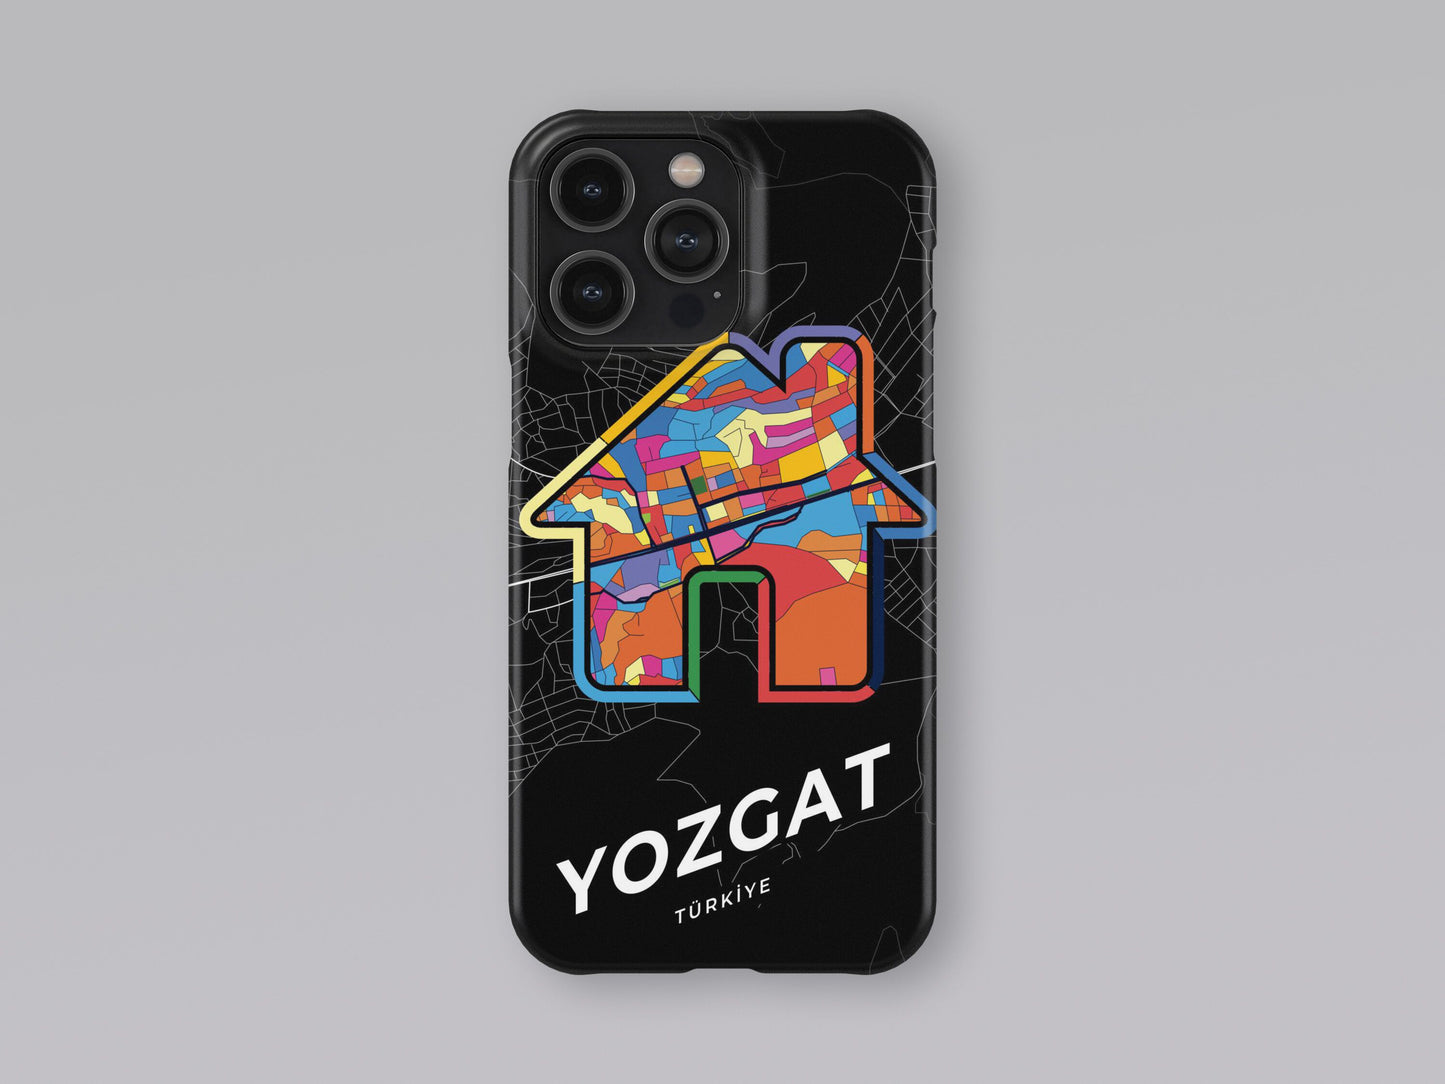 Yozgat Turkey slim phone case with colorful icon 3